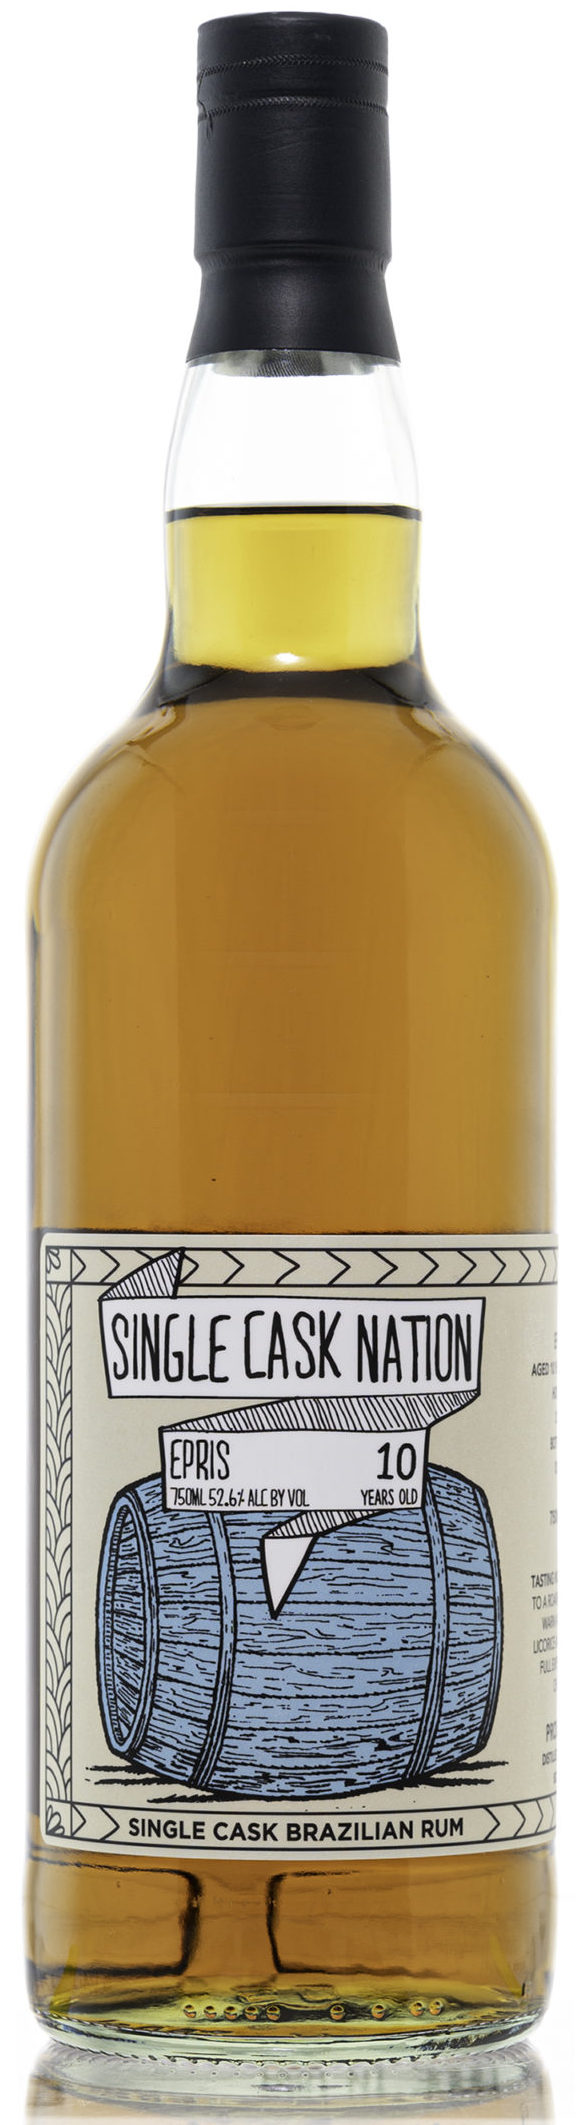 Single Cask Nation Epris 10Yr Single Cask Brazilian Rum 2011 750ml